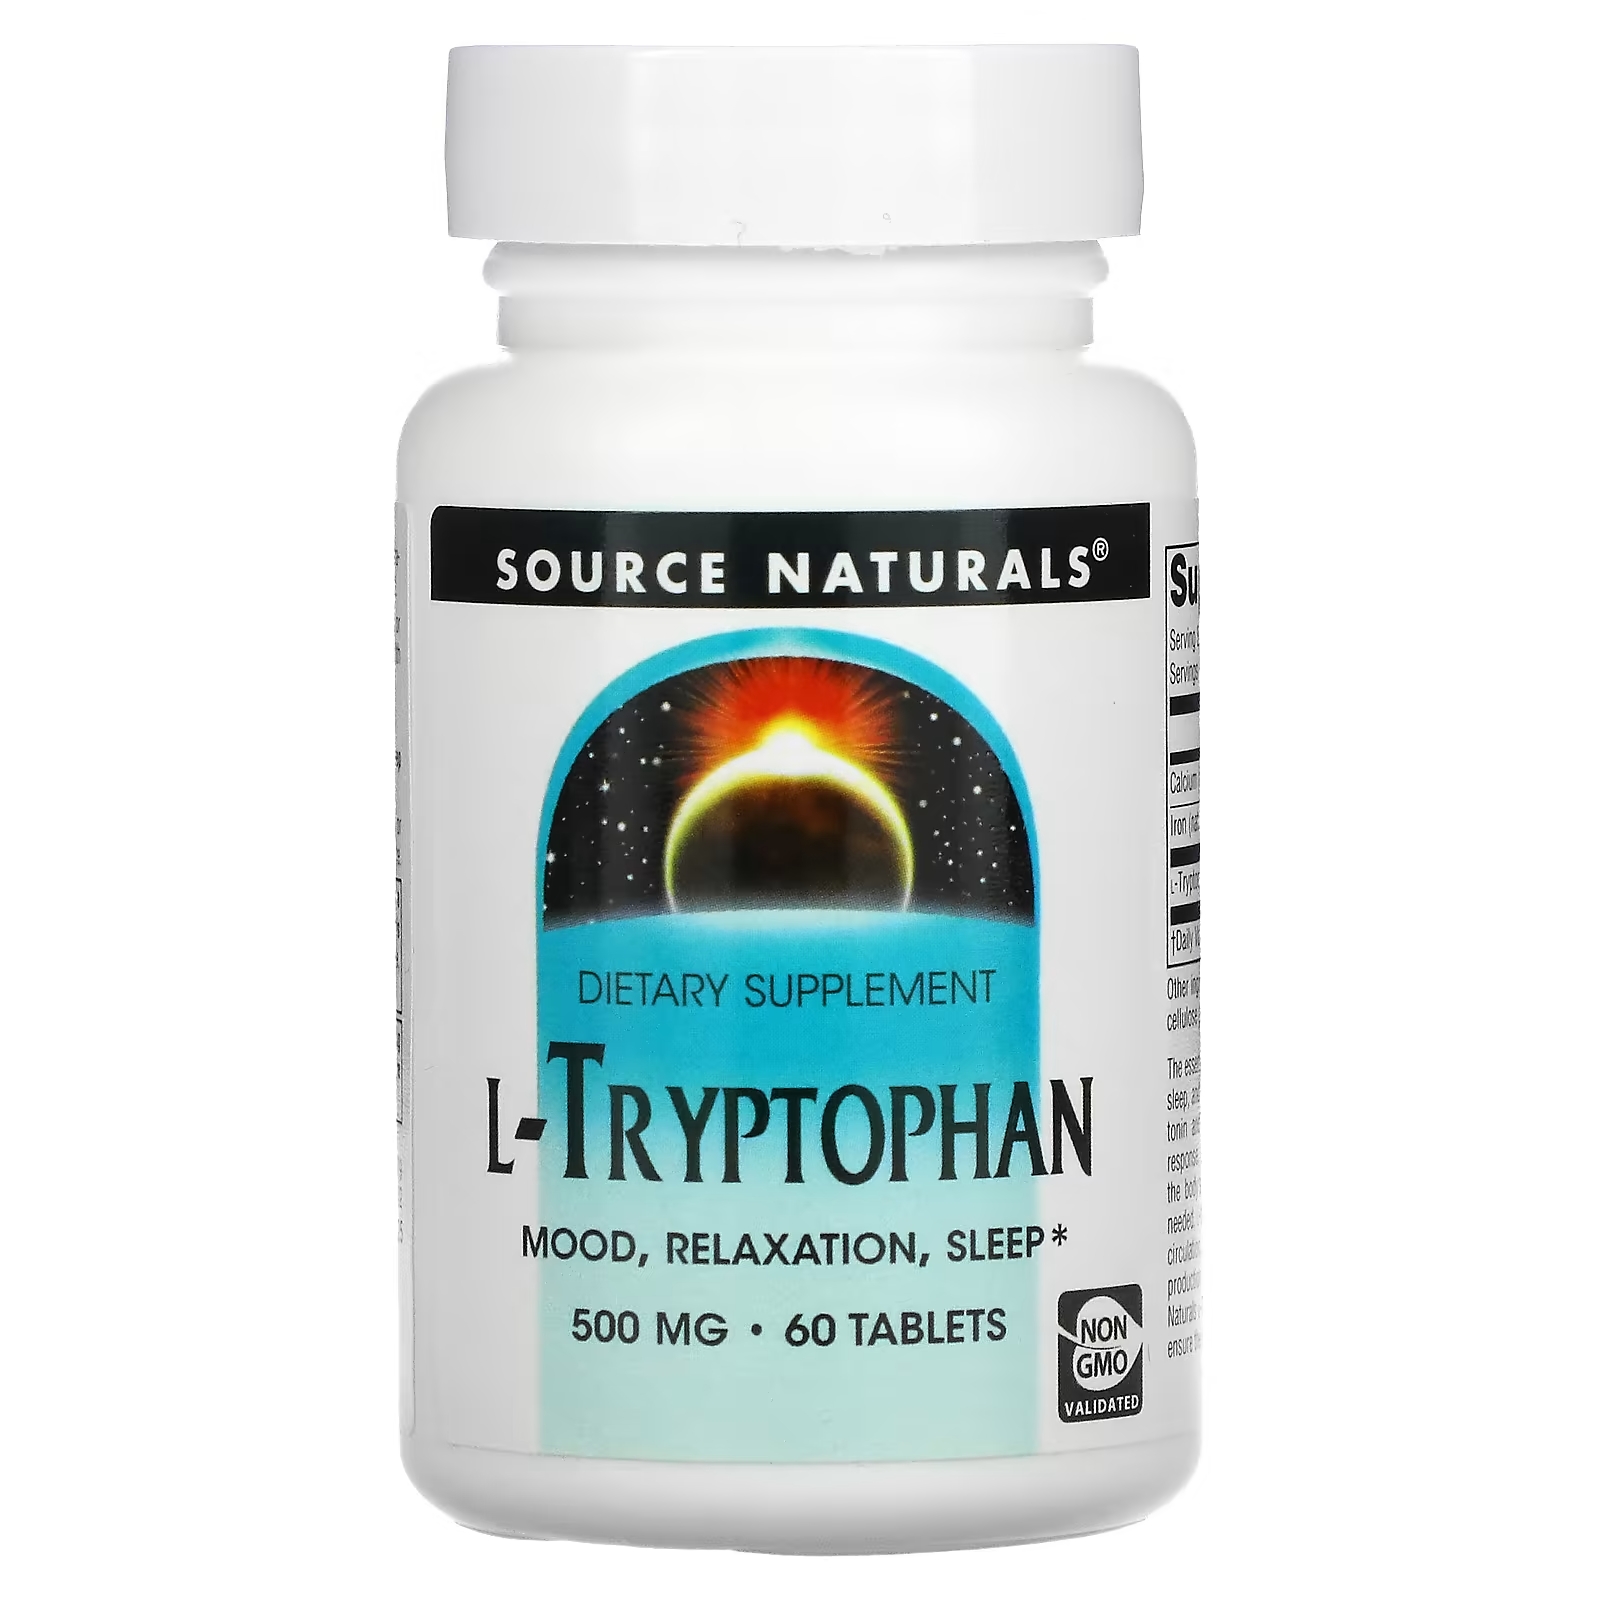 Source Naturals L-триптофан 500 мг, 60 таблеток source naturals блокировщик углеводов стадия 2 500 мг 60 таблеток